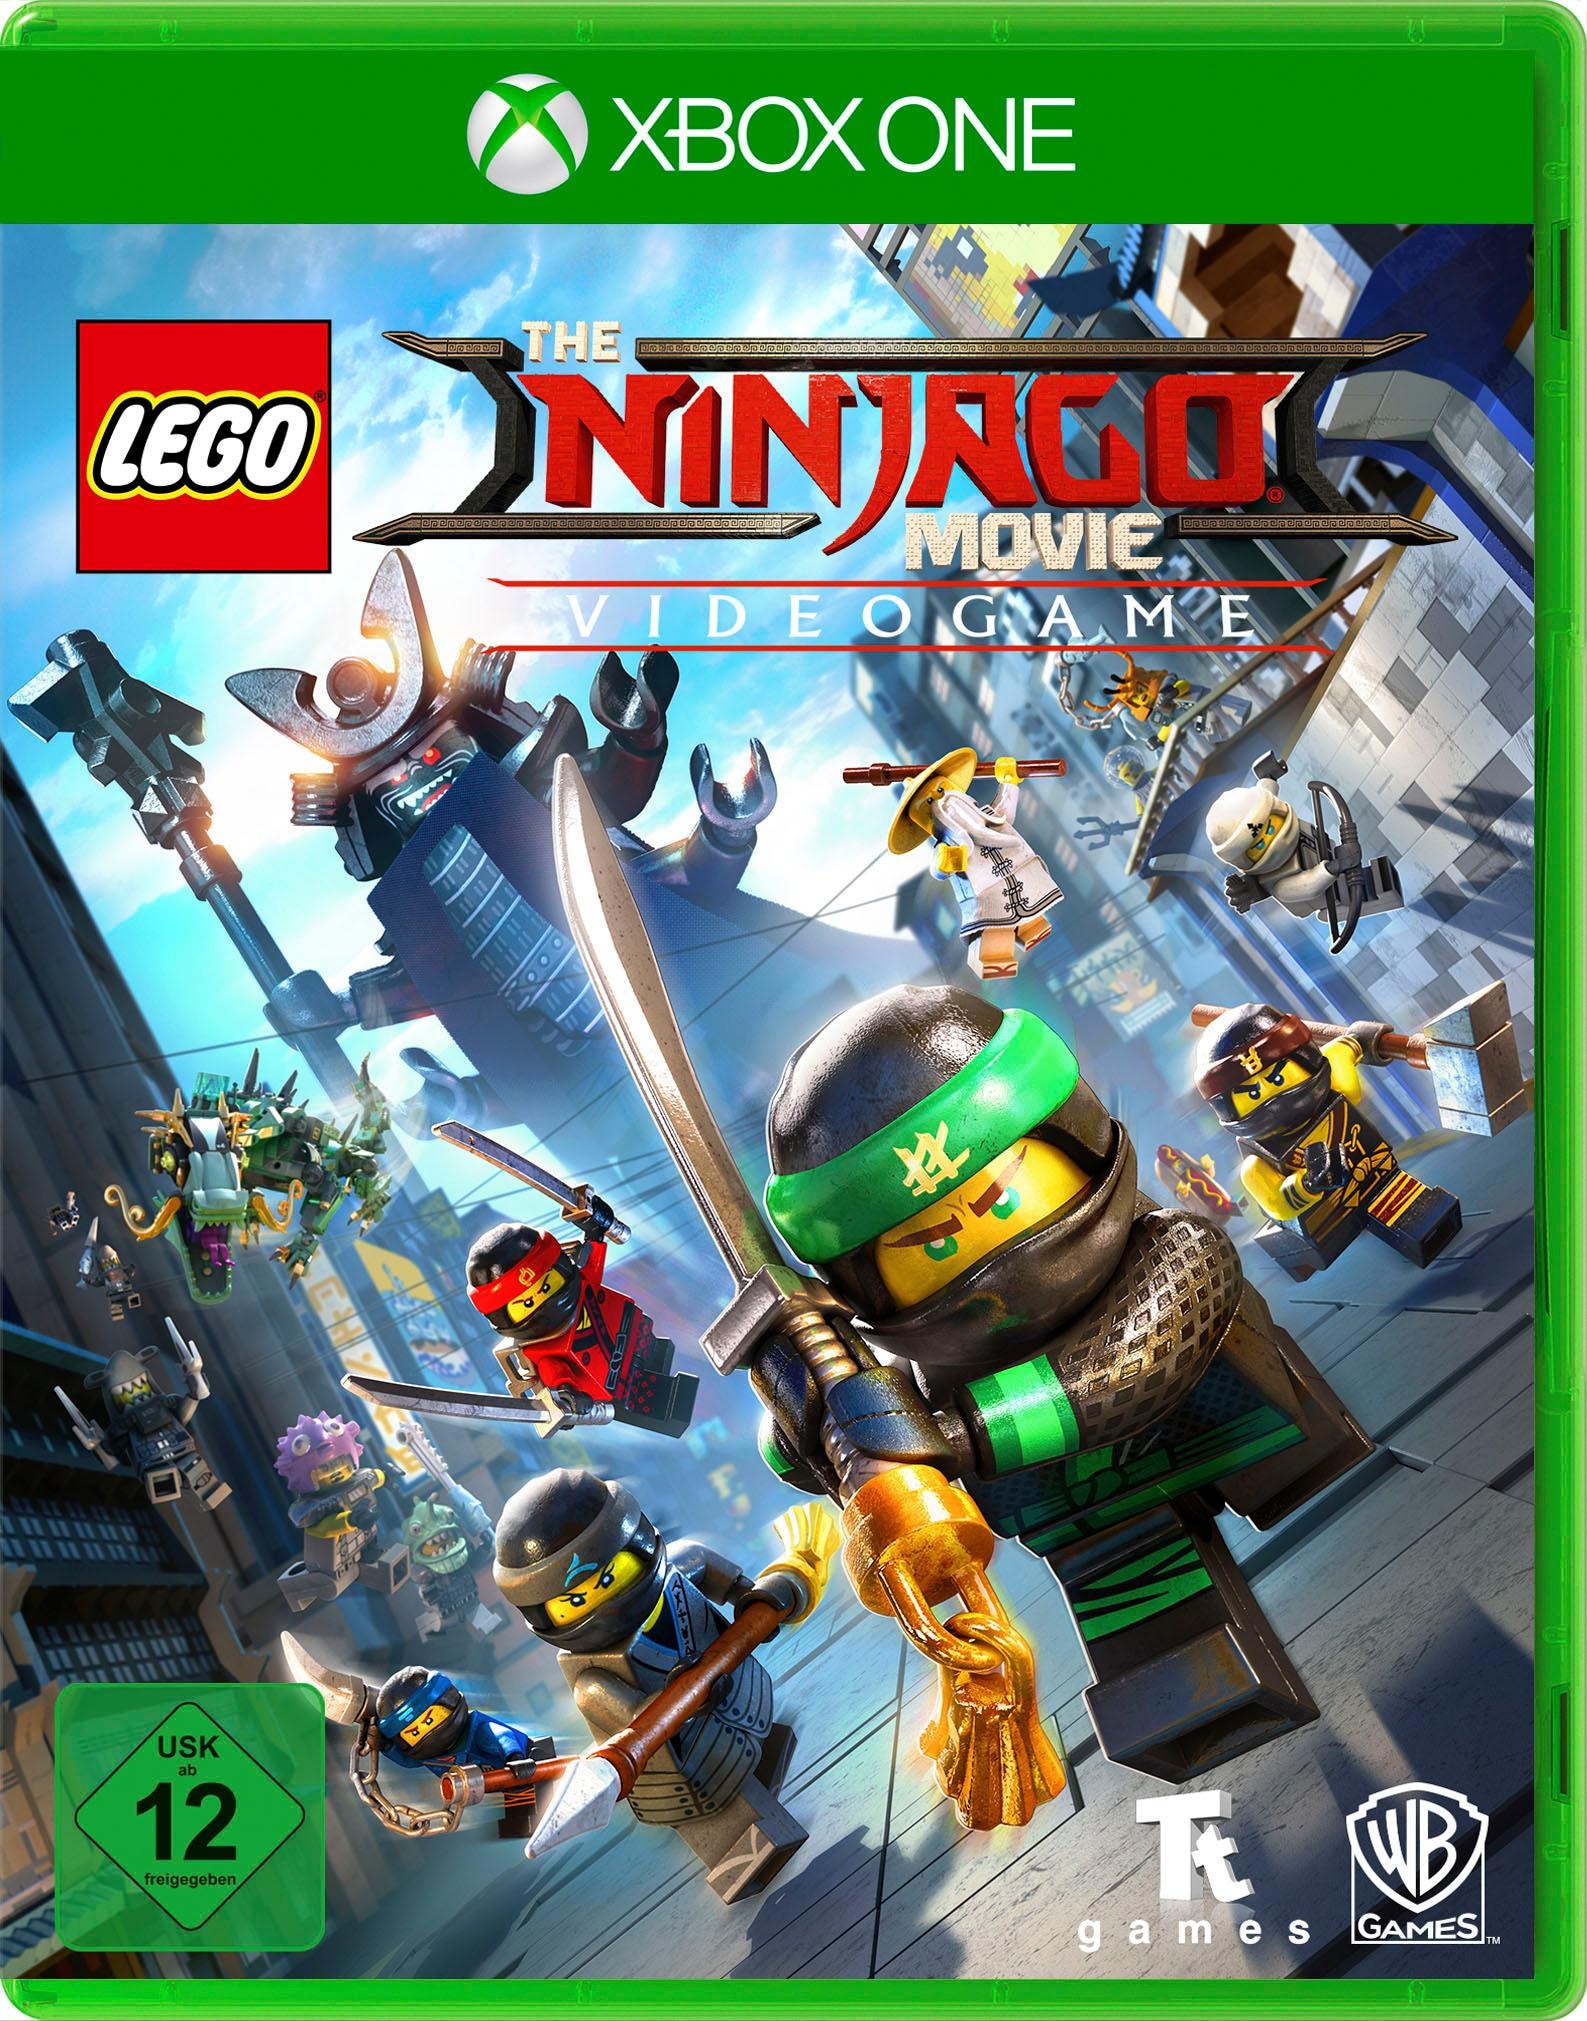 Spielesoftware »The Lego Ninjago Movie Videogame«, Xbox One, Software Pyramide